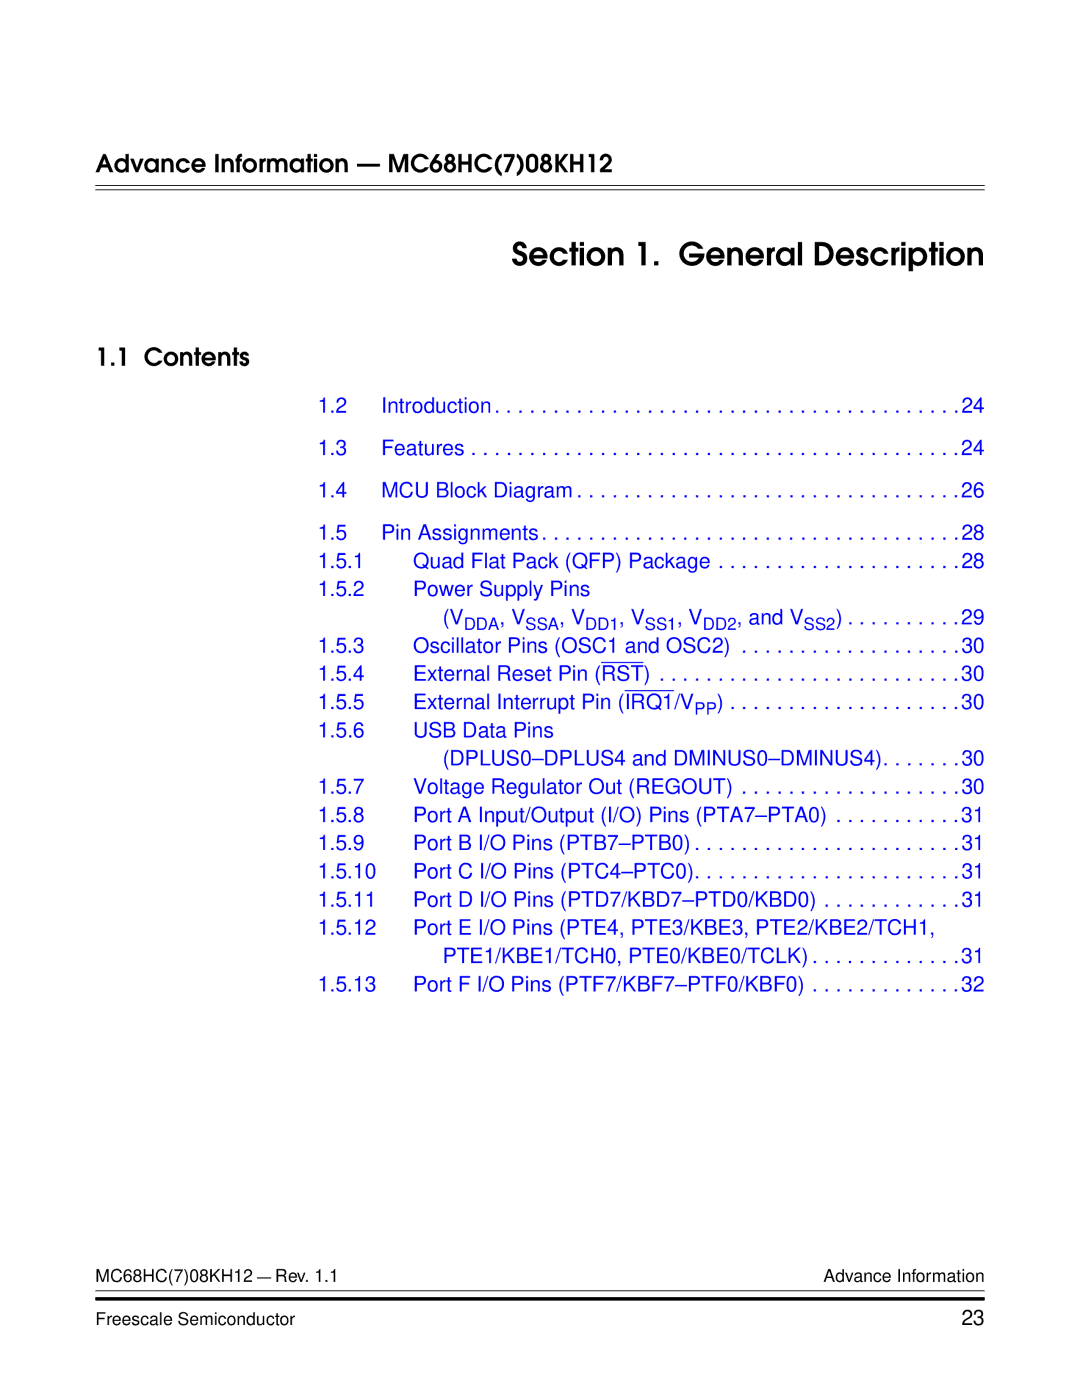 Freescale Semiconductor MC68HC08KH12 manual General Description, Contents 